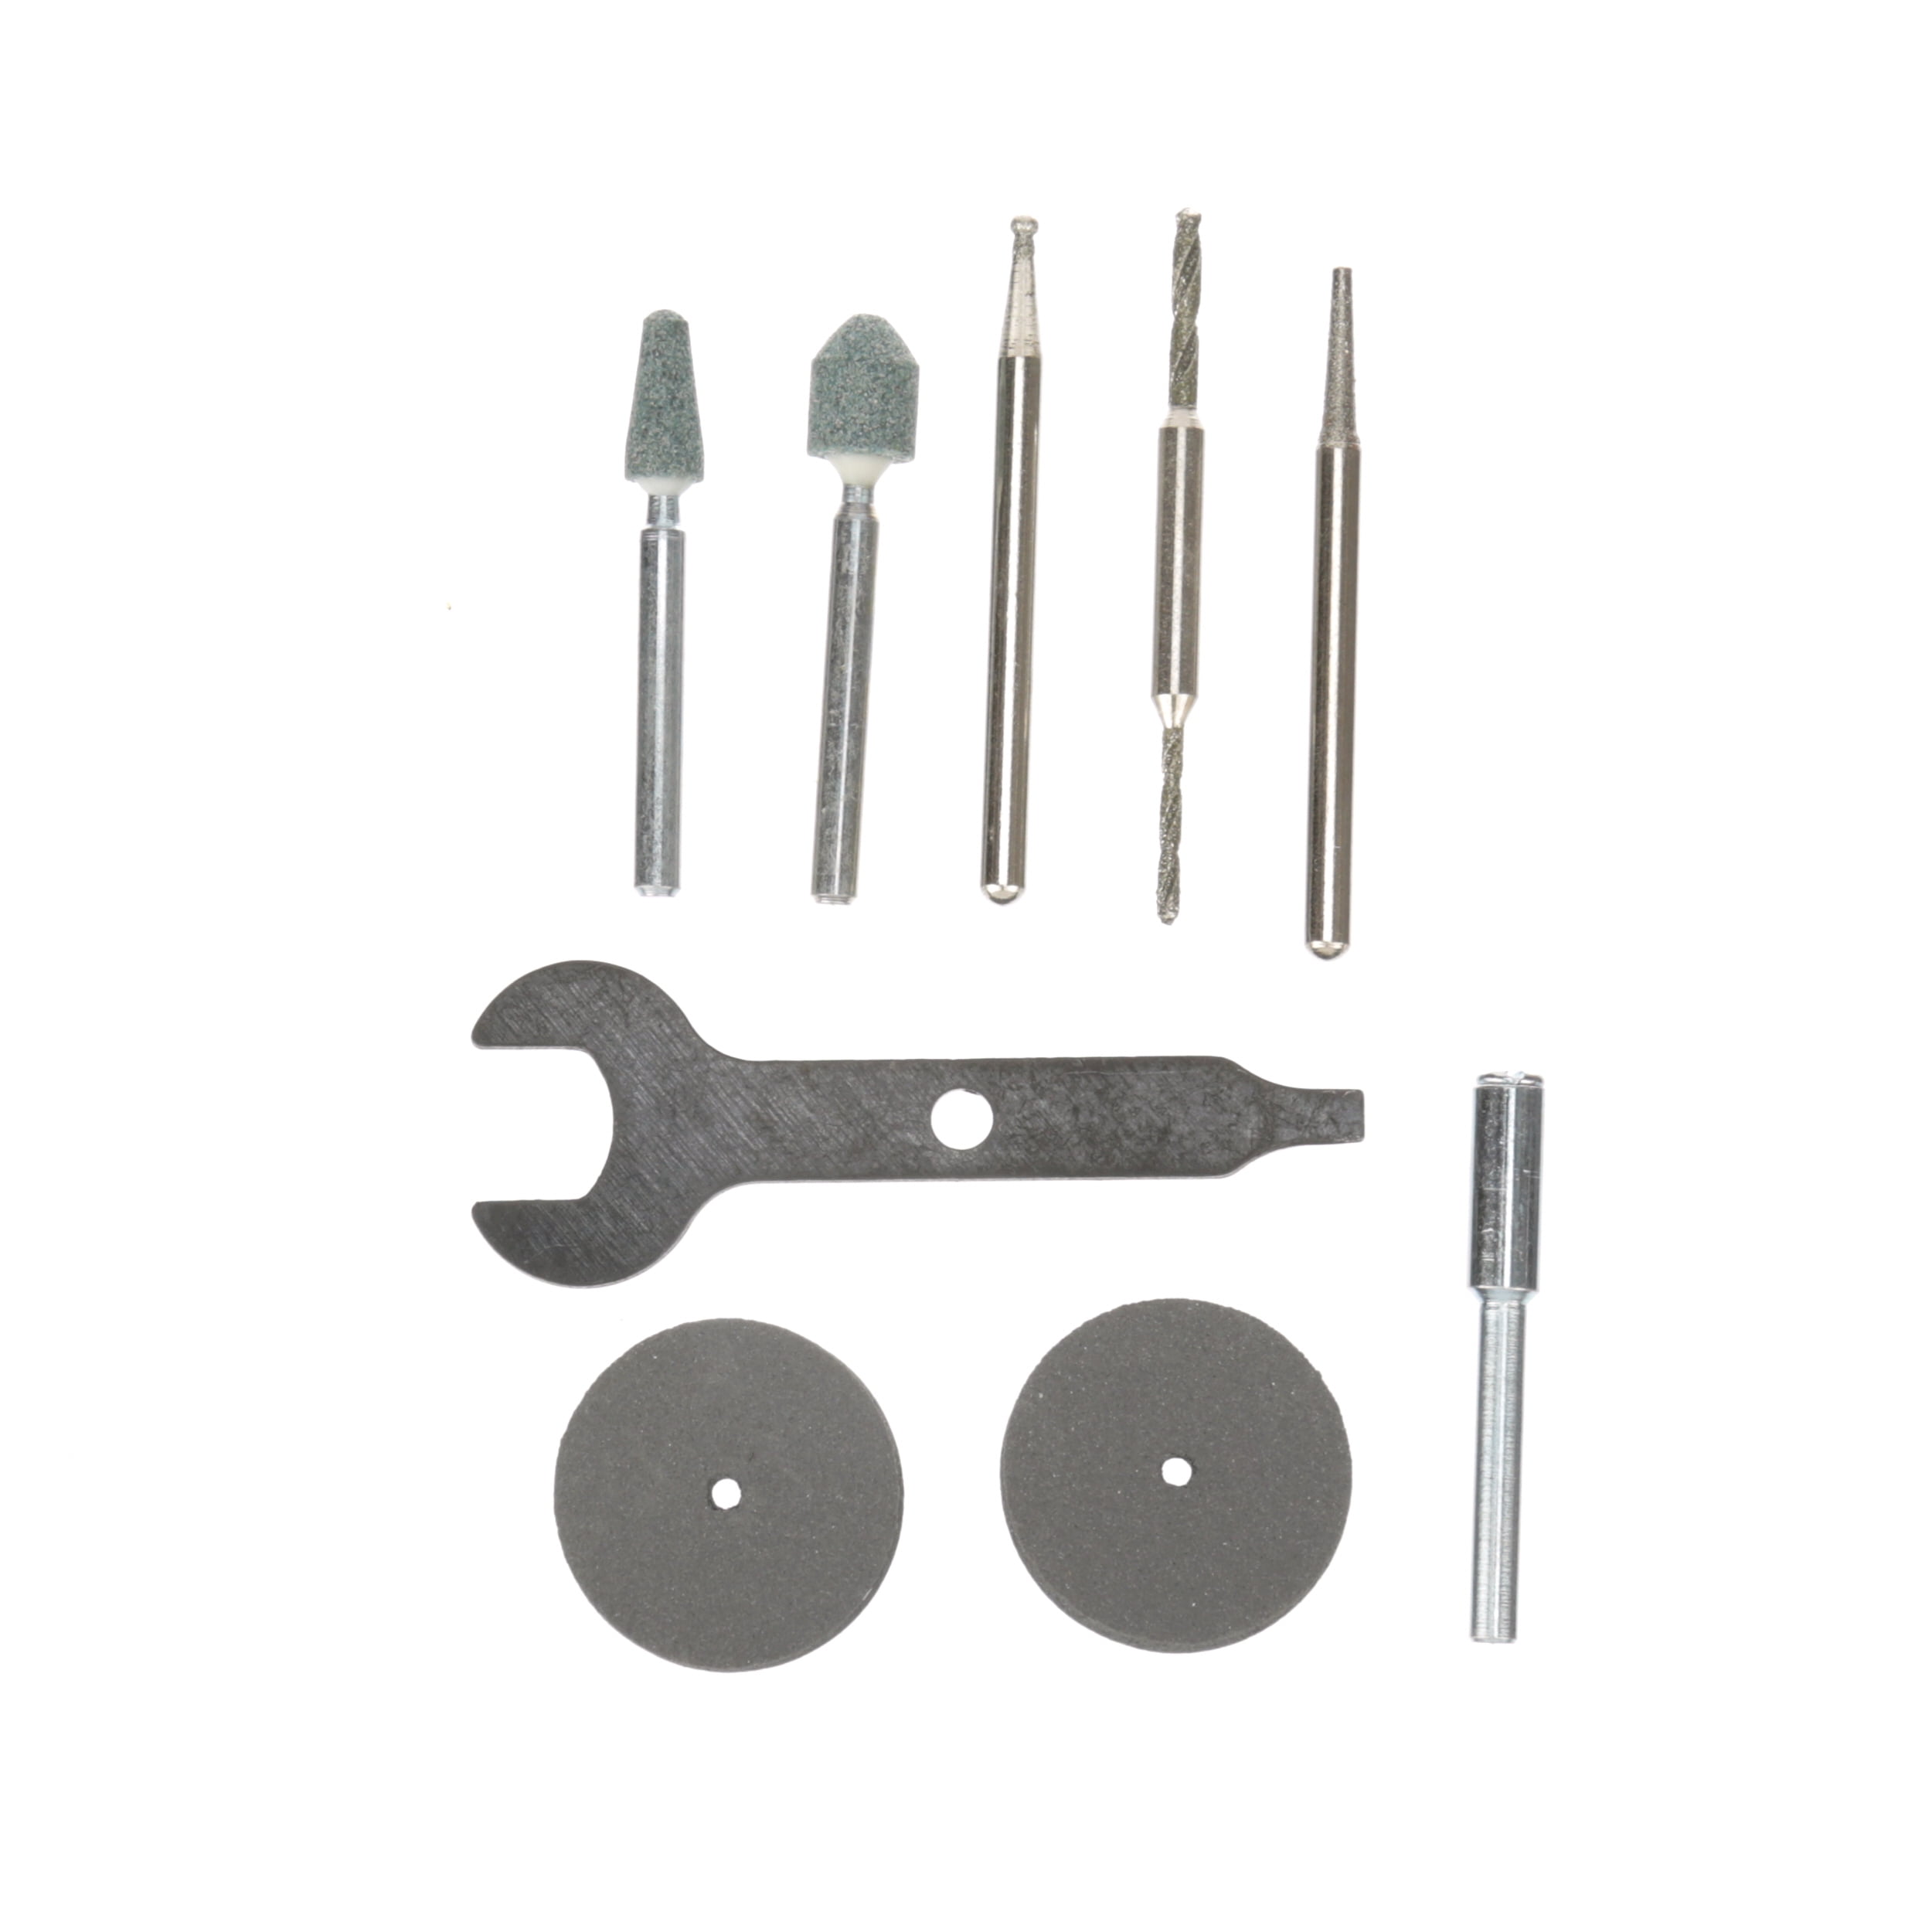 Micro workshop Dremel tool kit - Maring Auction Co LLC